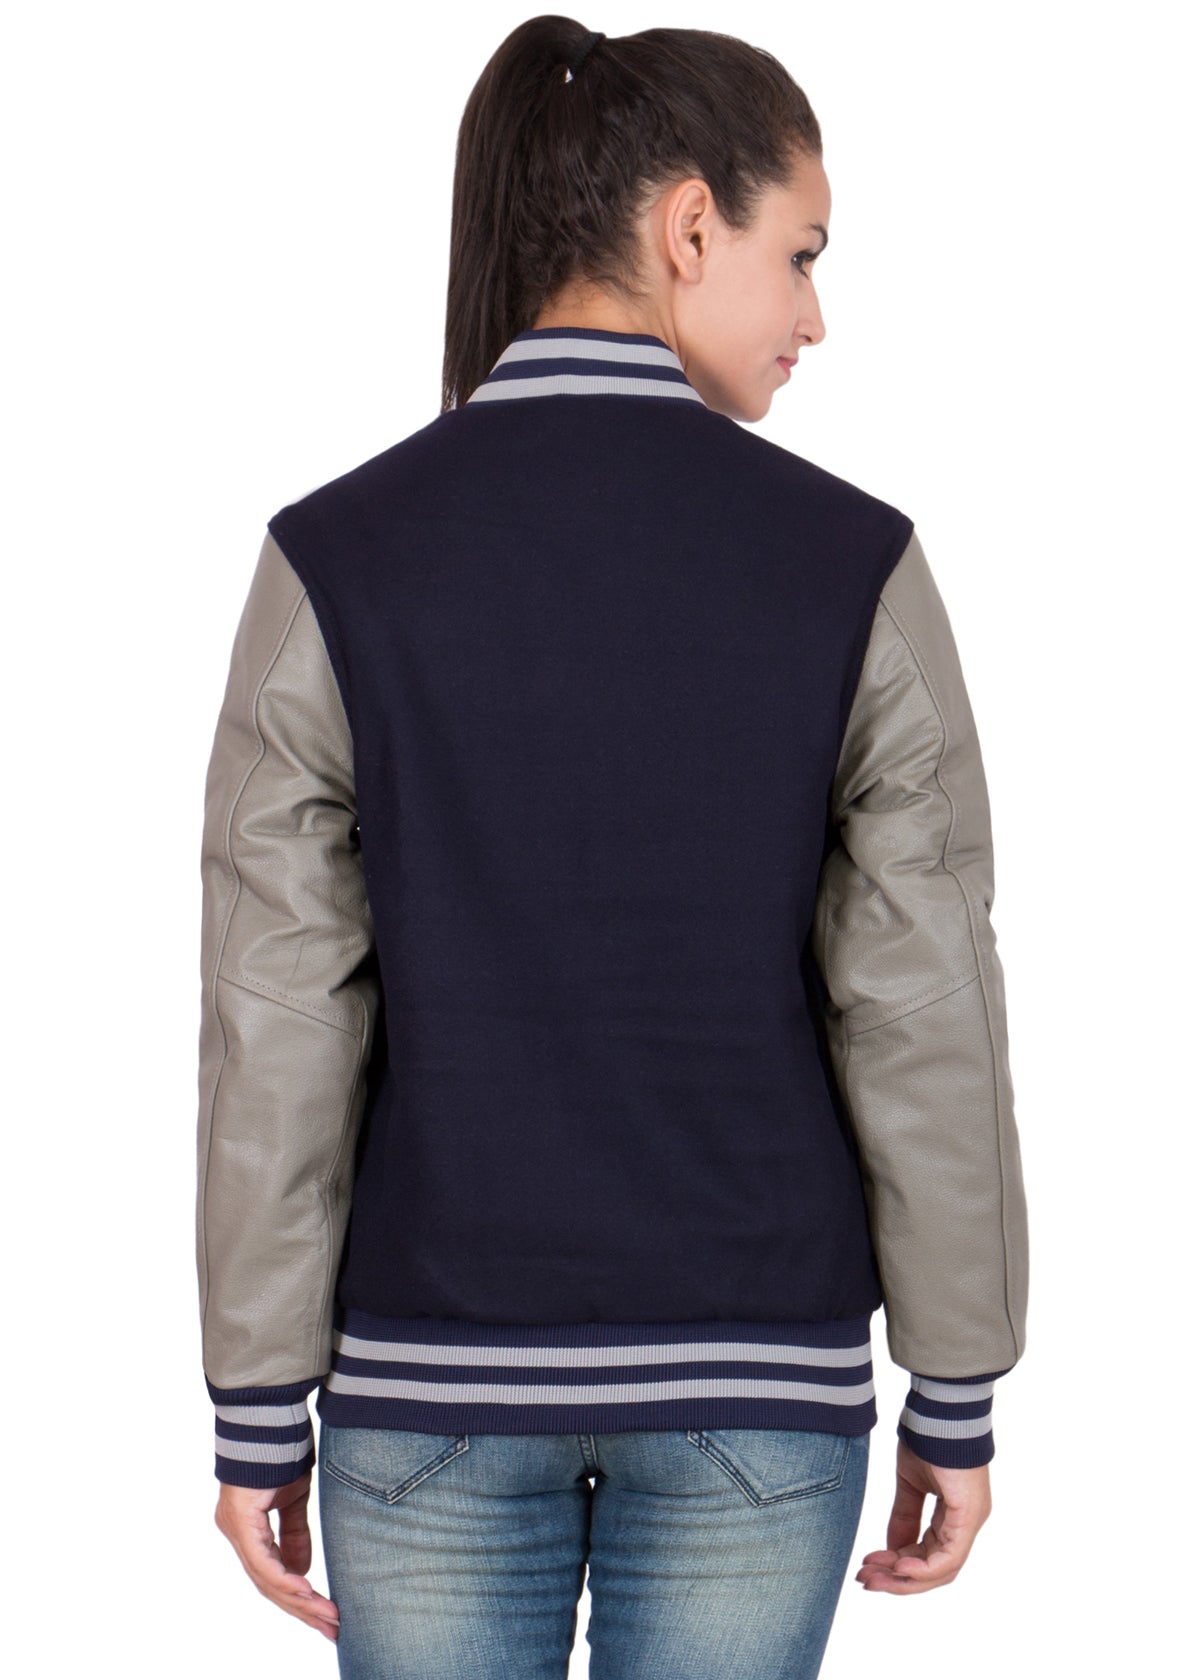 Women's Dark Blue and Grey Varsity Jacket